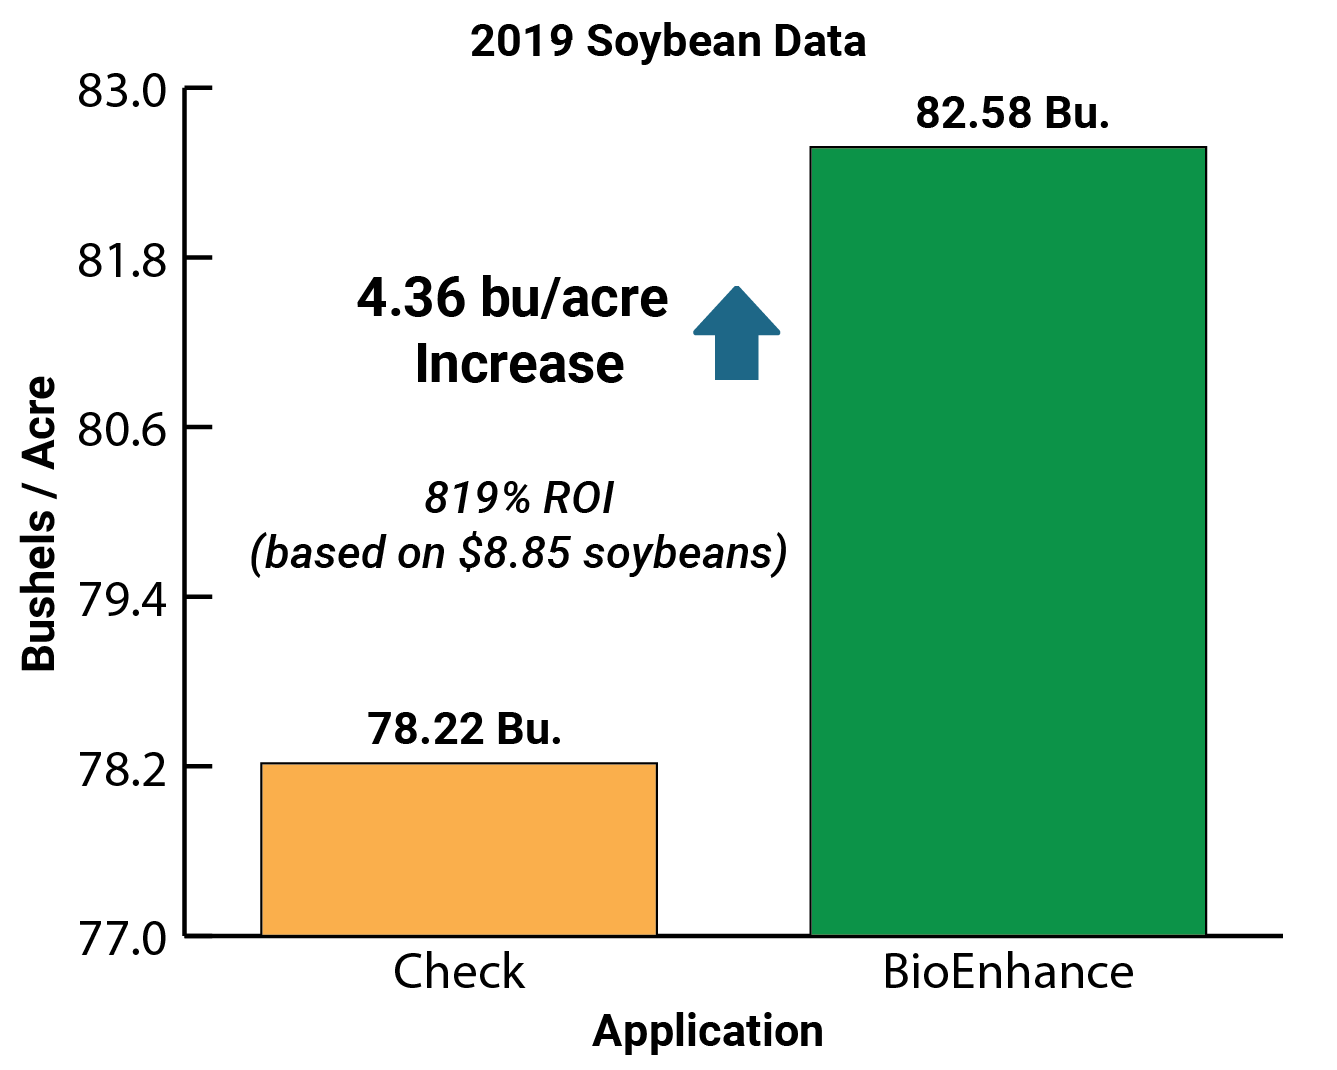 BioEnhance 2019 Soybean Data